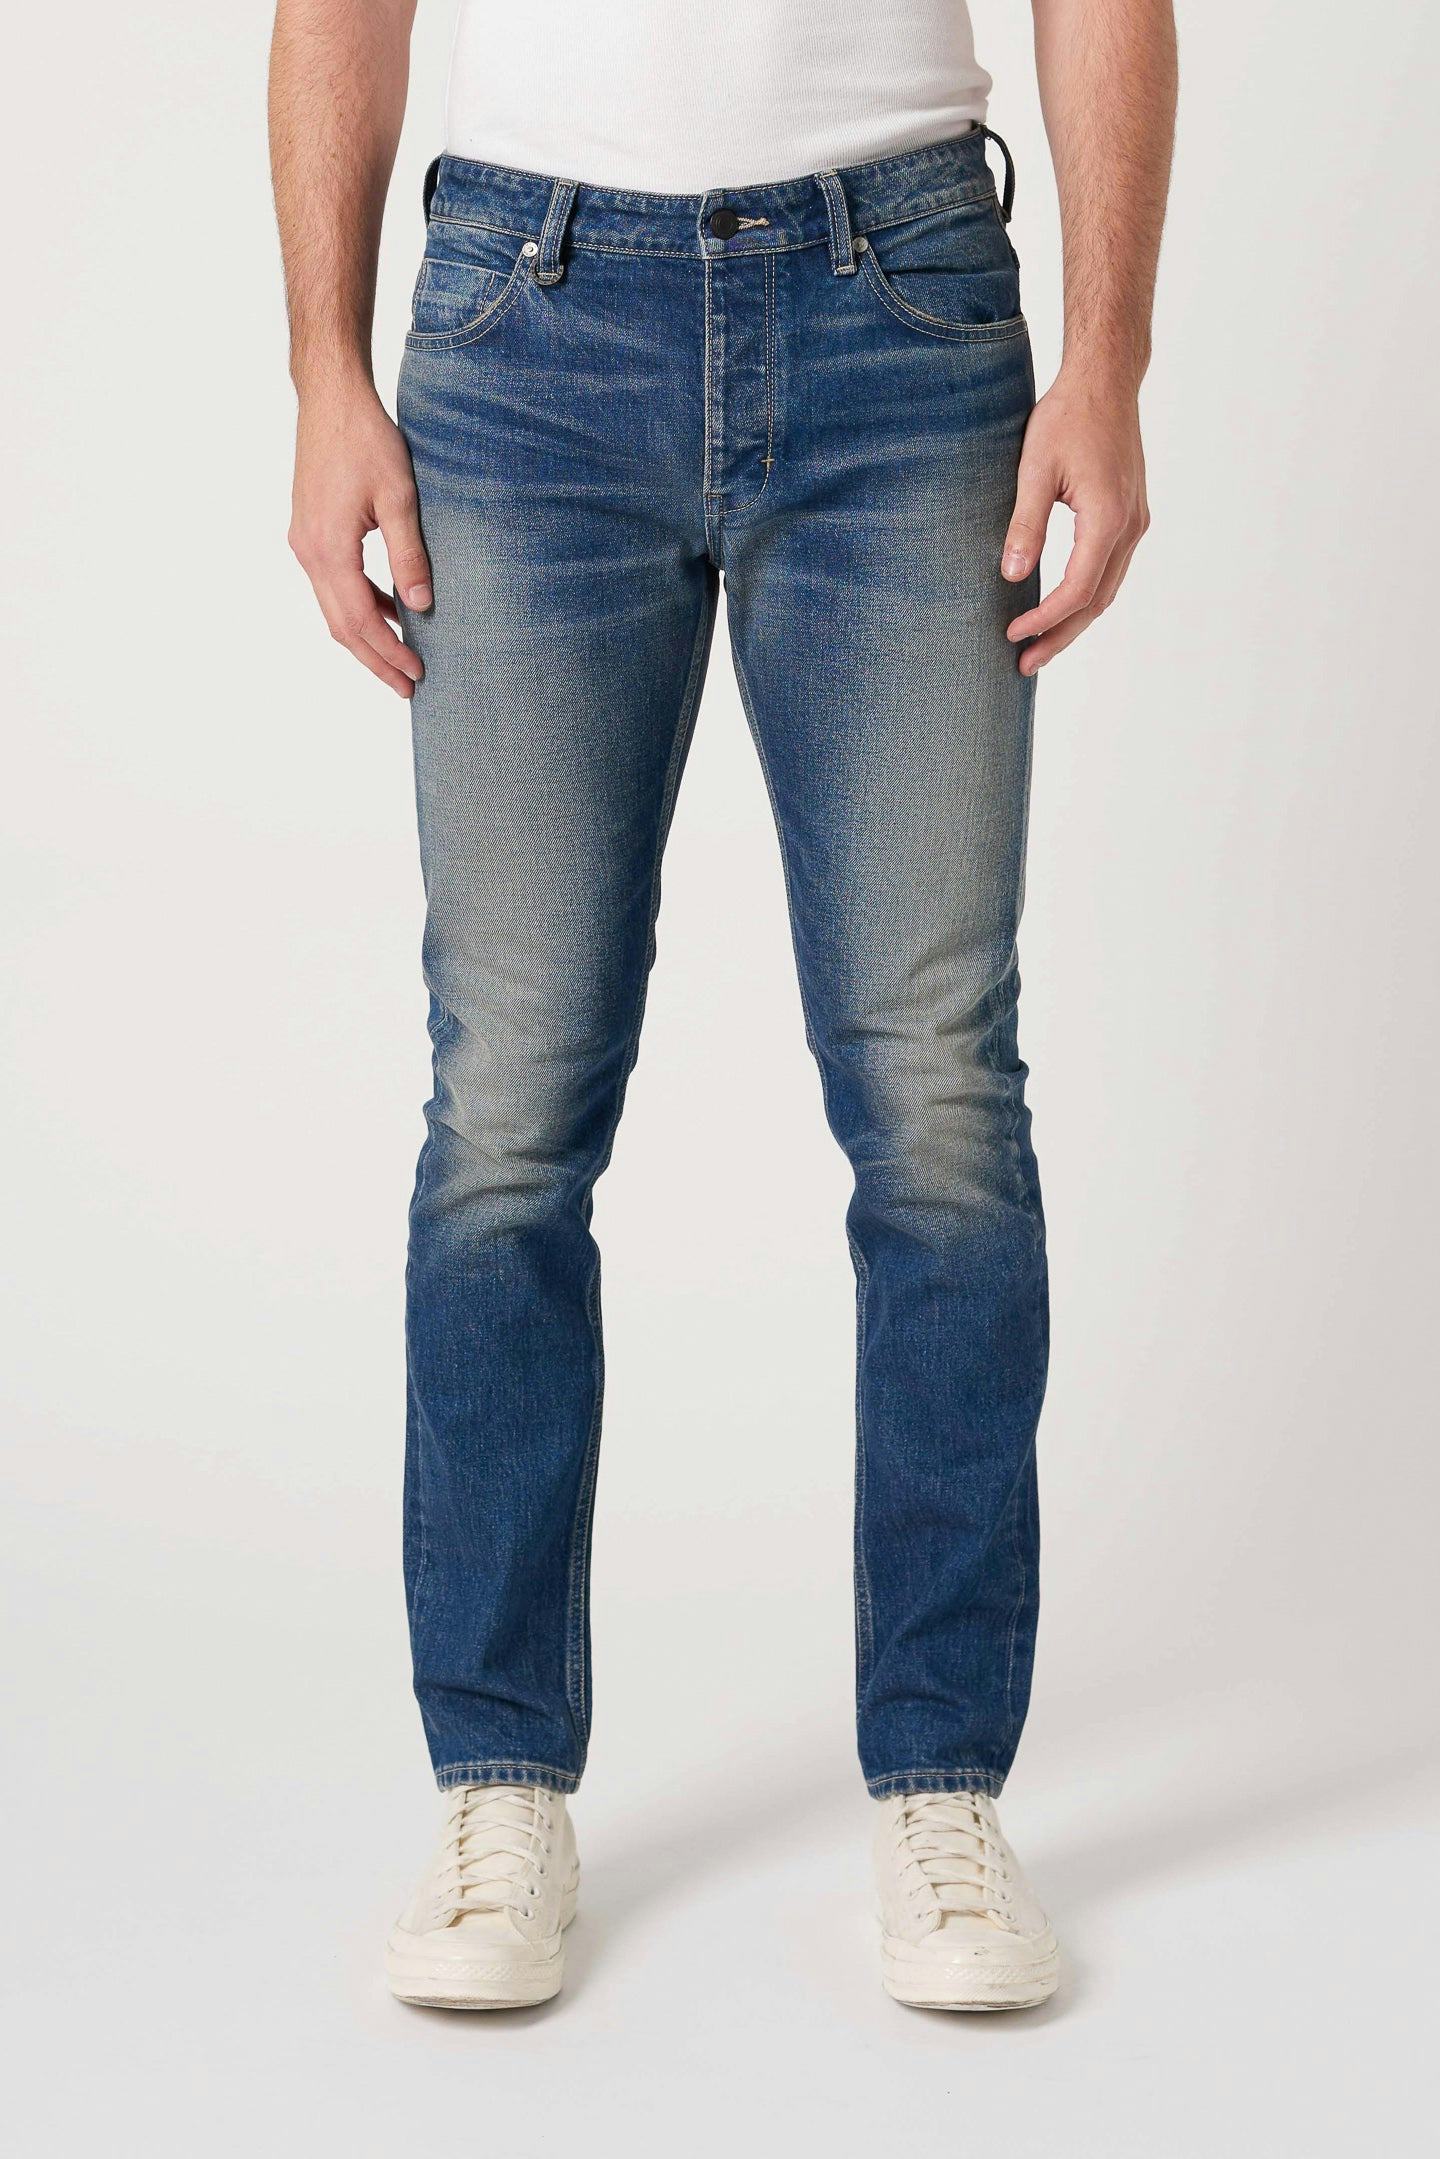 Lou Slim - Montage Neuw mid darkblue mens-jeans 